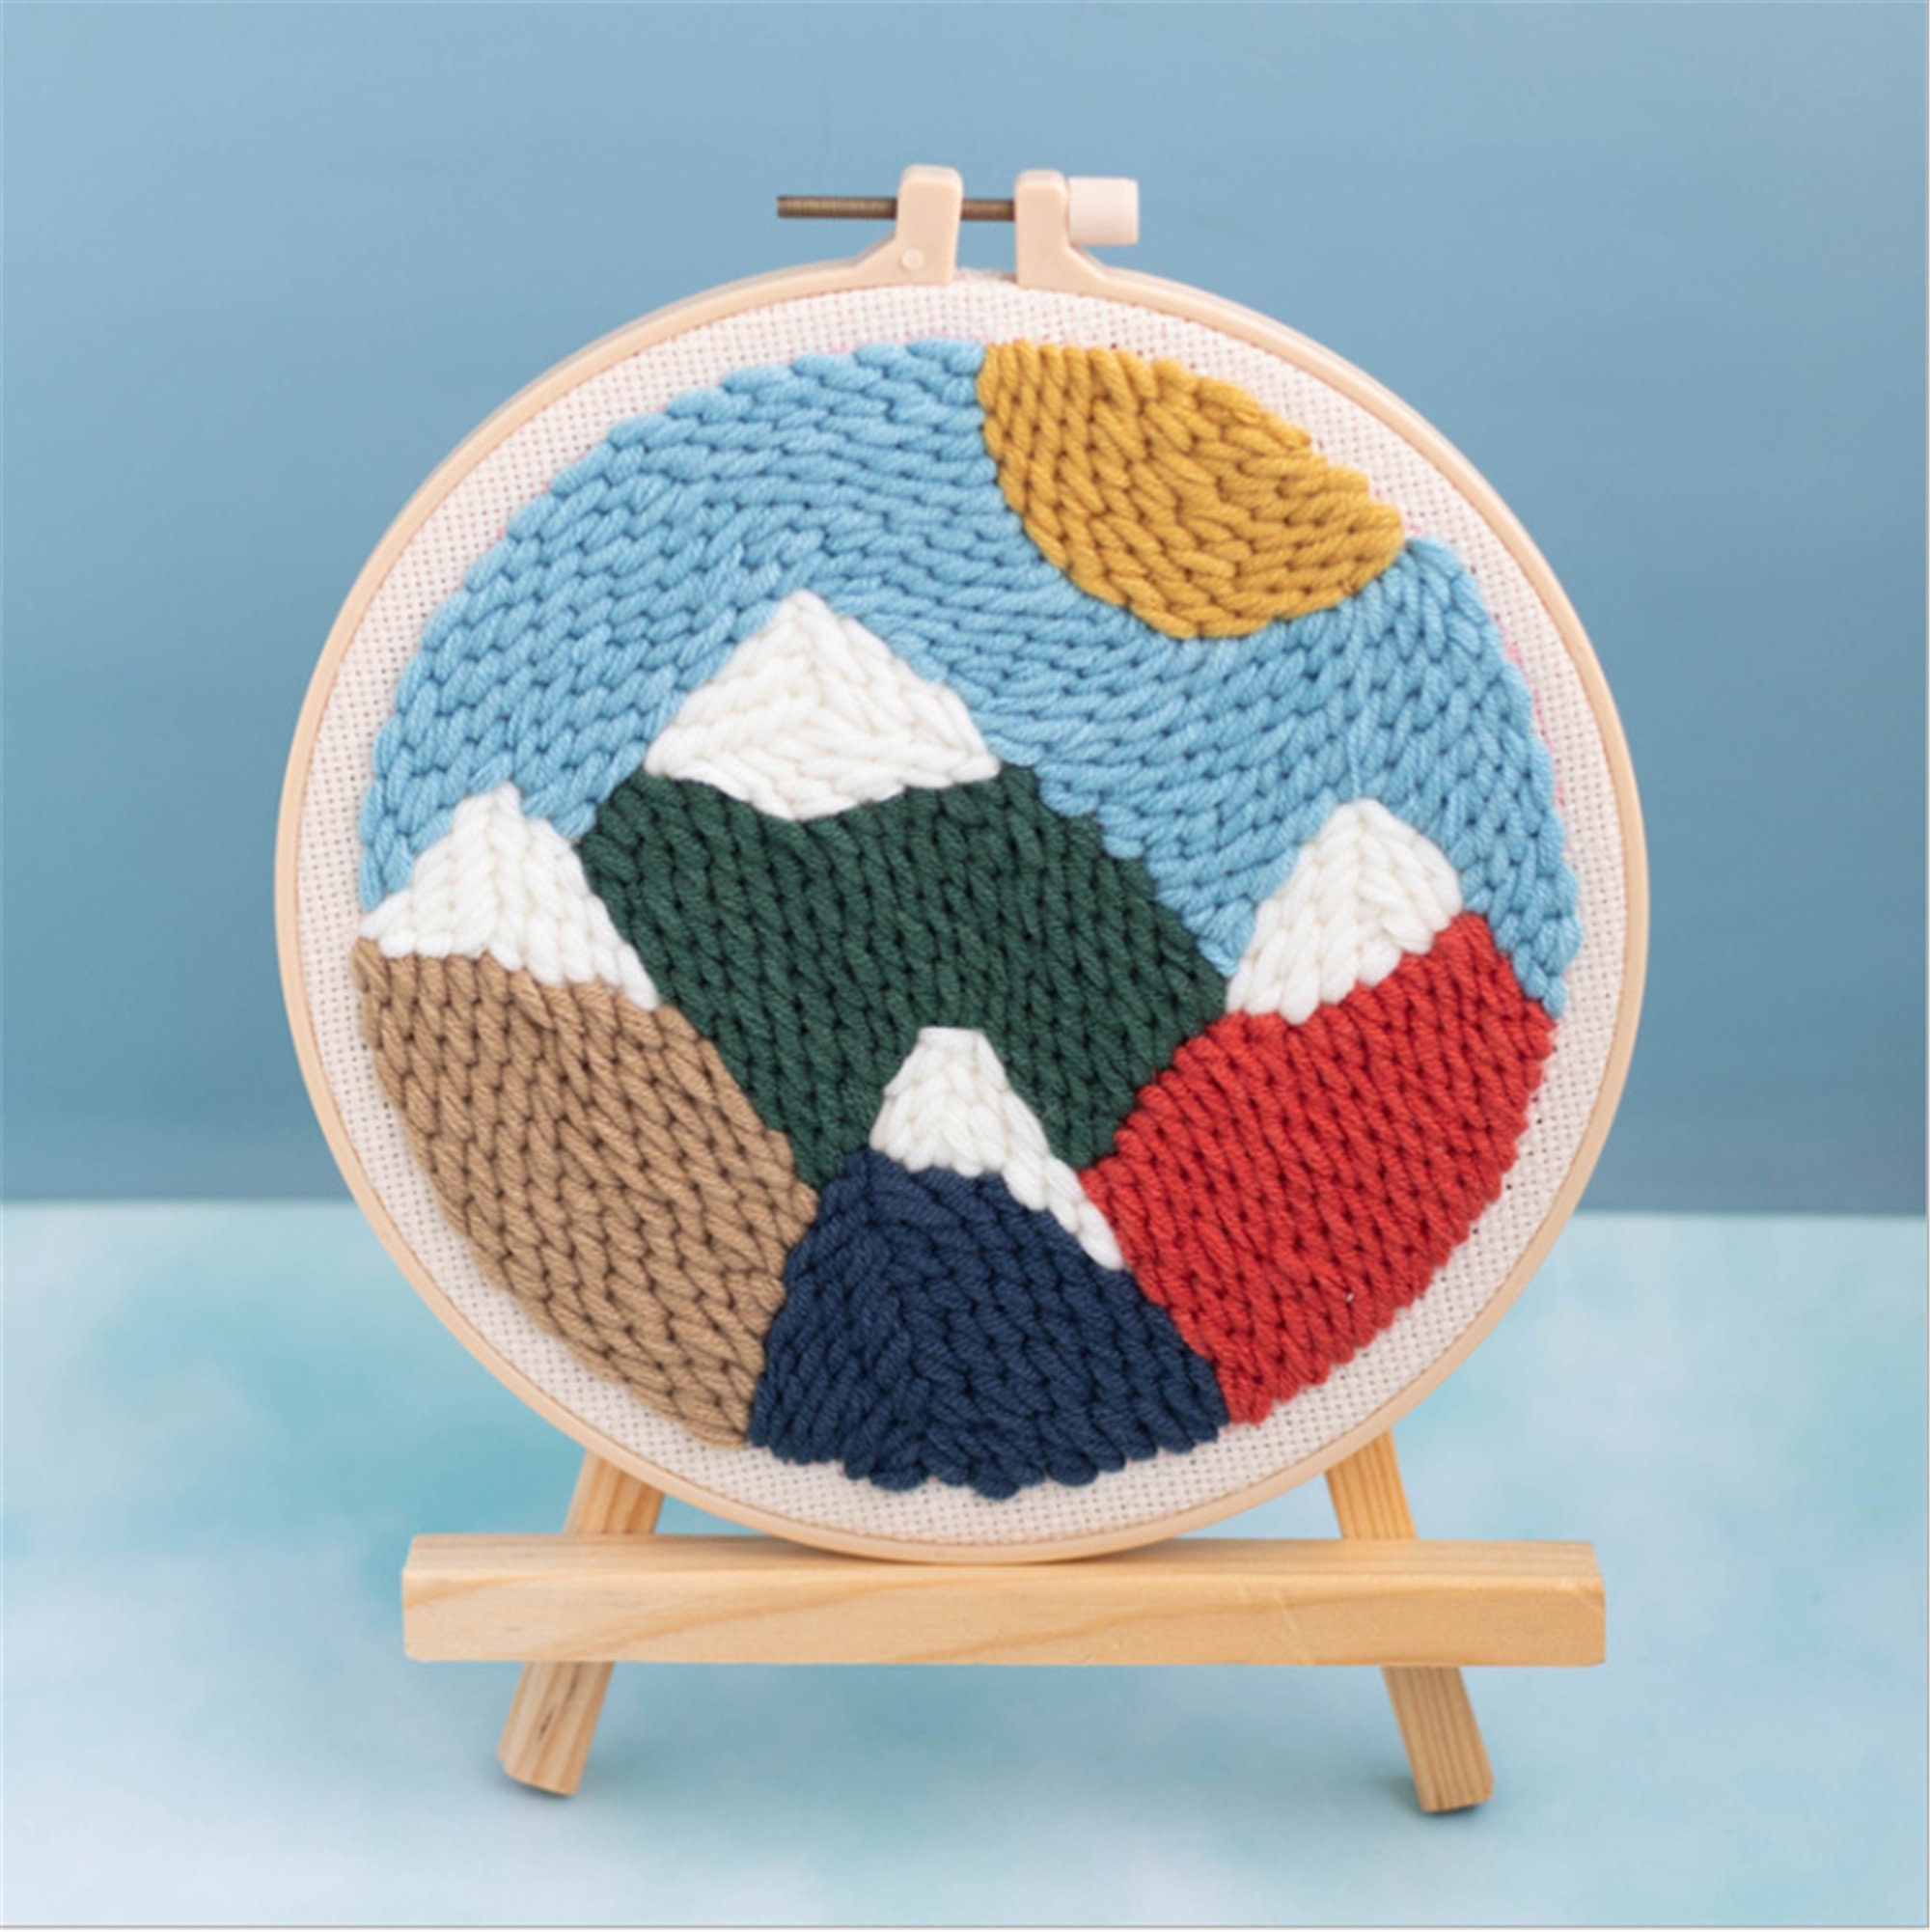 Coaster Punch Needle Kits, Rainbow Tufting Coaster Kit, DIY Beginner  Embroidery Kit 